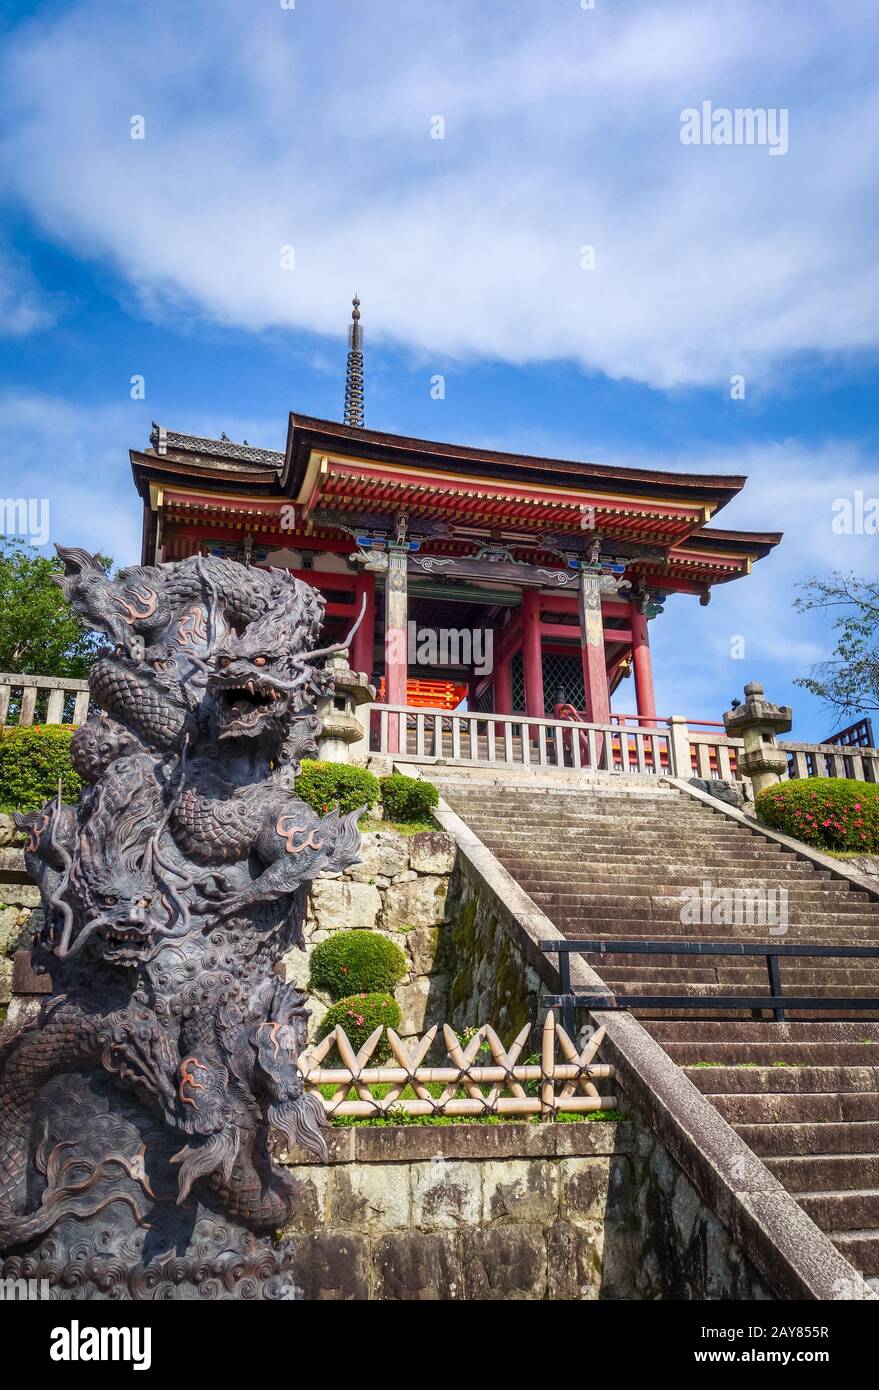 Dragon statue in front of the kiyomizu-dera temple, Kyoto, Japan Stock Photo